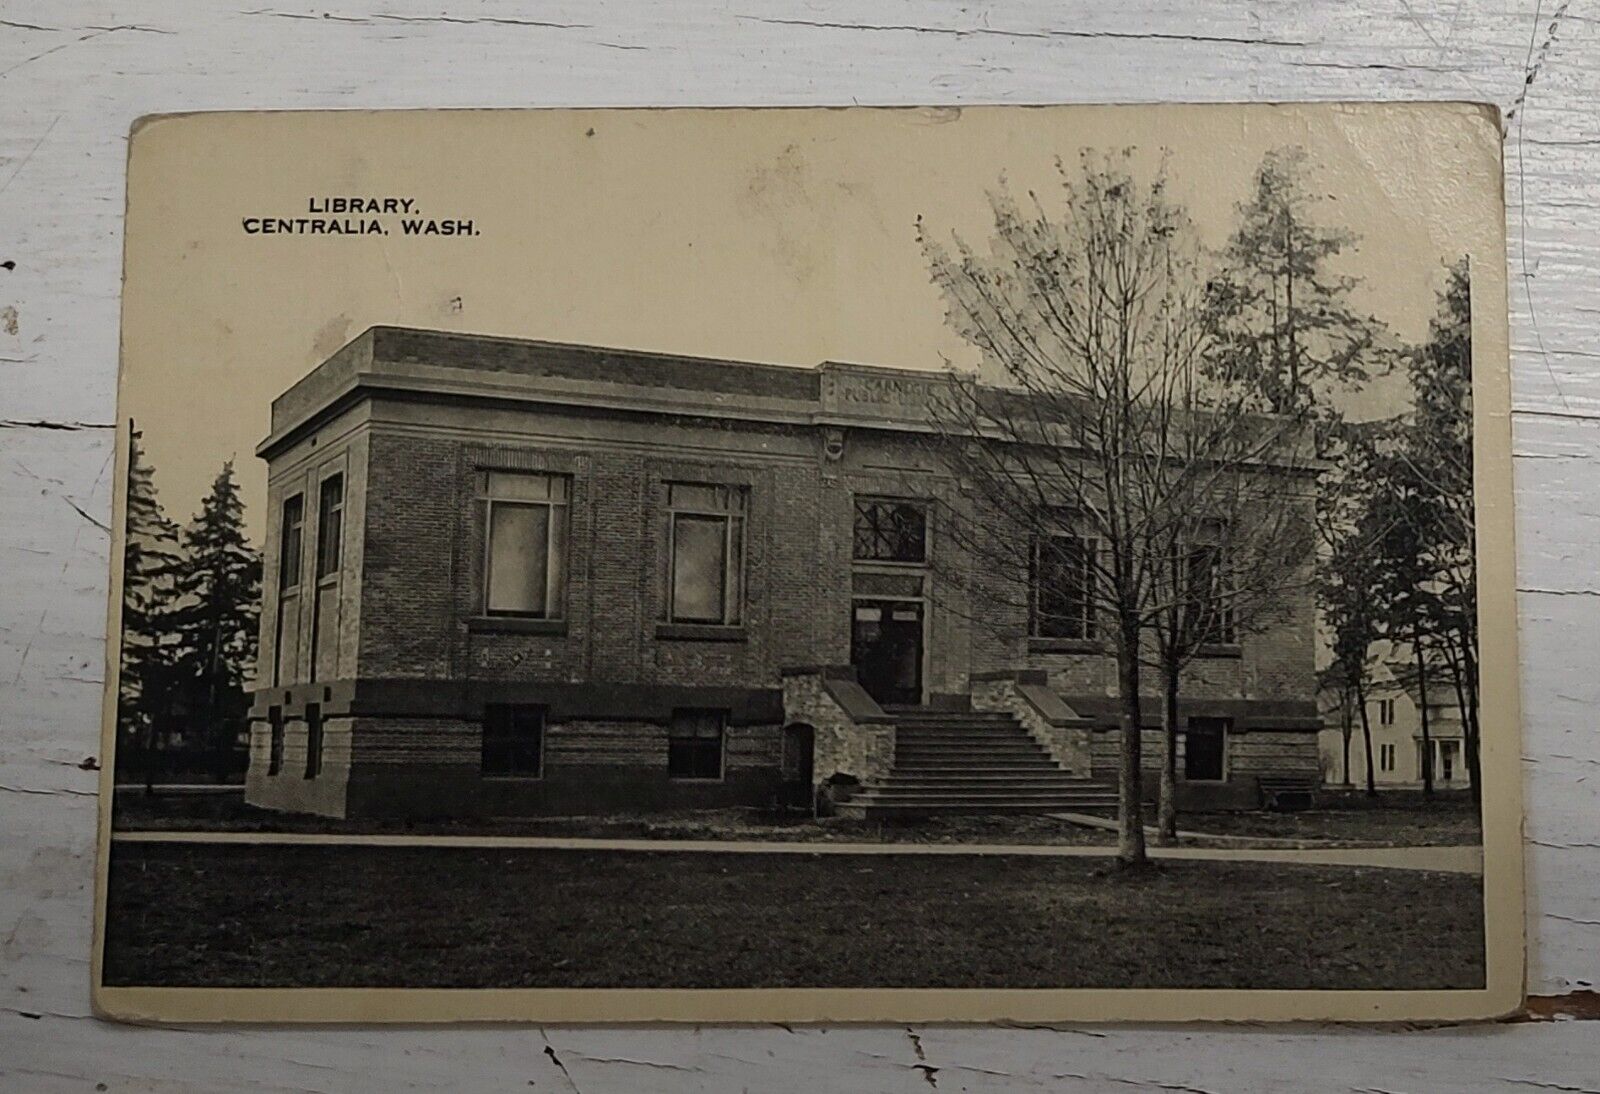 Antique RPPC Postcard Library Centralia, Washington 1922